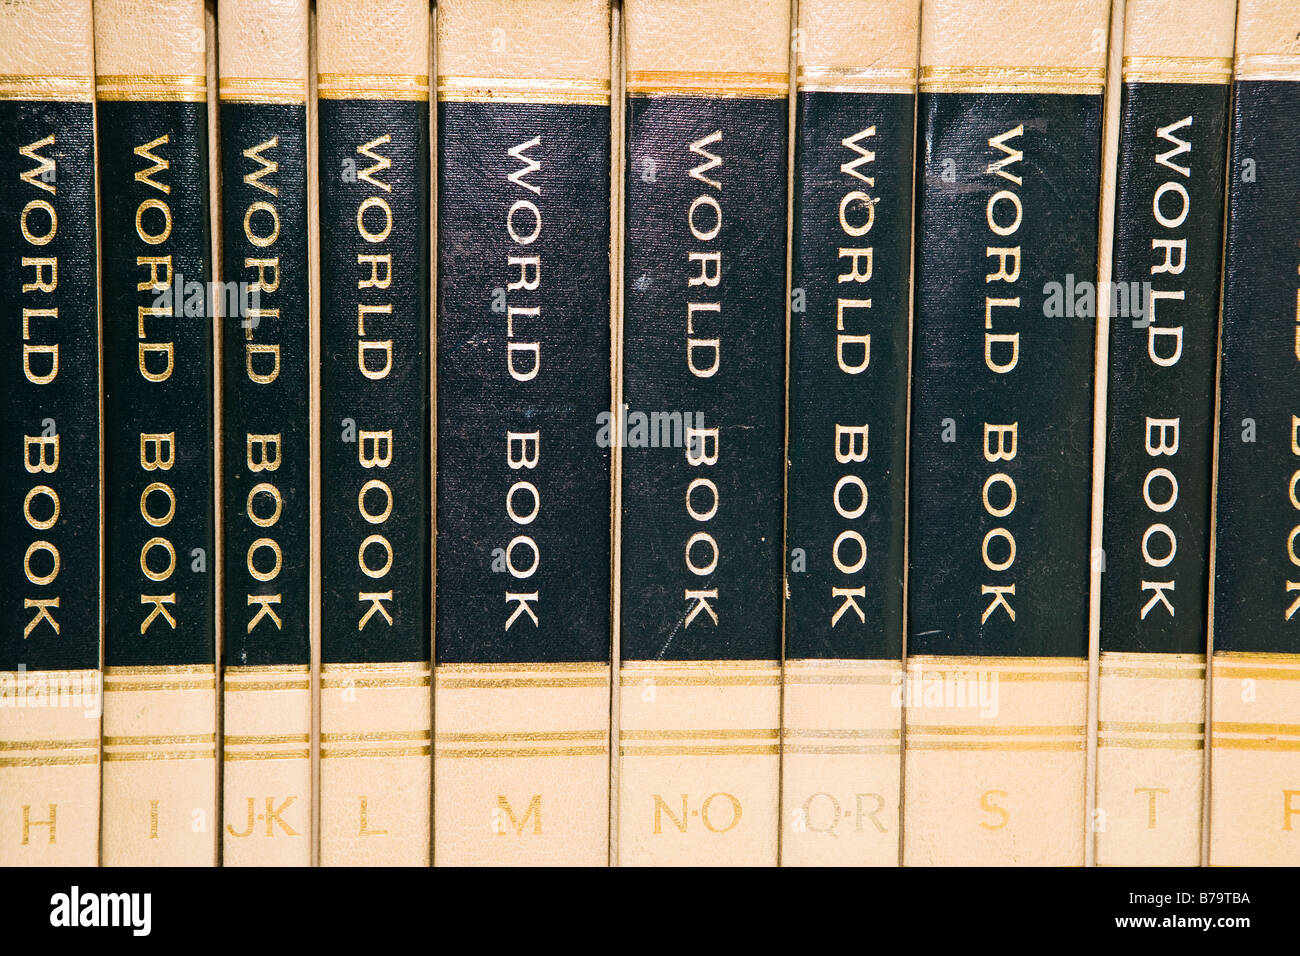 World Book Encyclopedias on a shelf Stock Photo